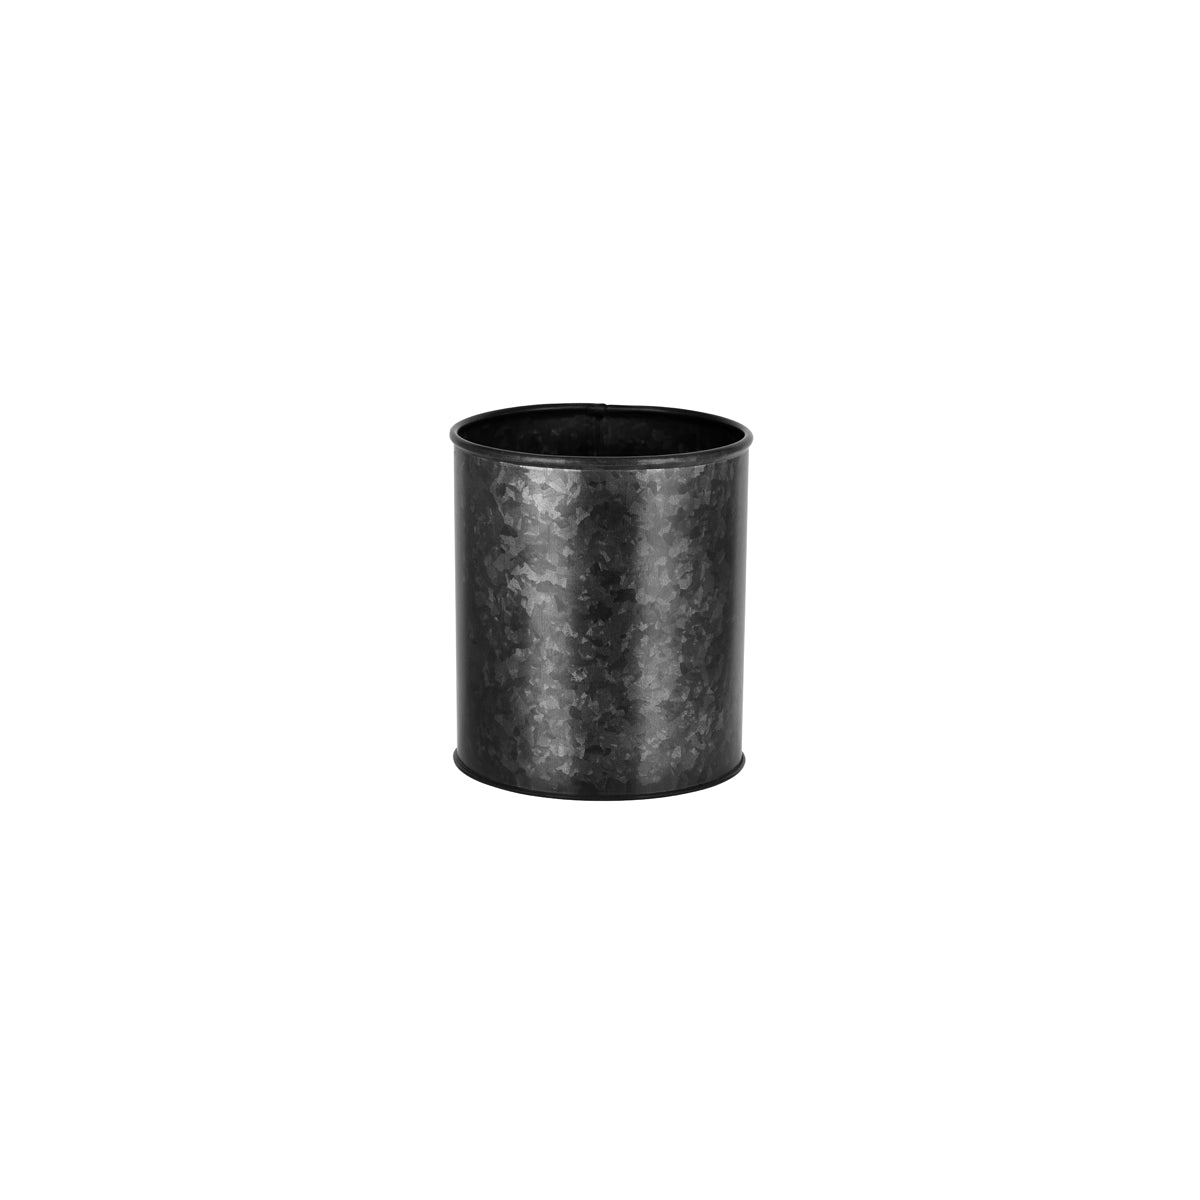 78776 Chef Inox Coney Island Pot Black Galvanised 120x140mm Tomkin Australia Hospitality Supplies